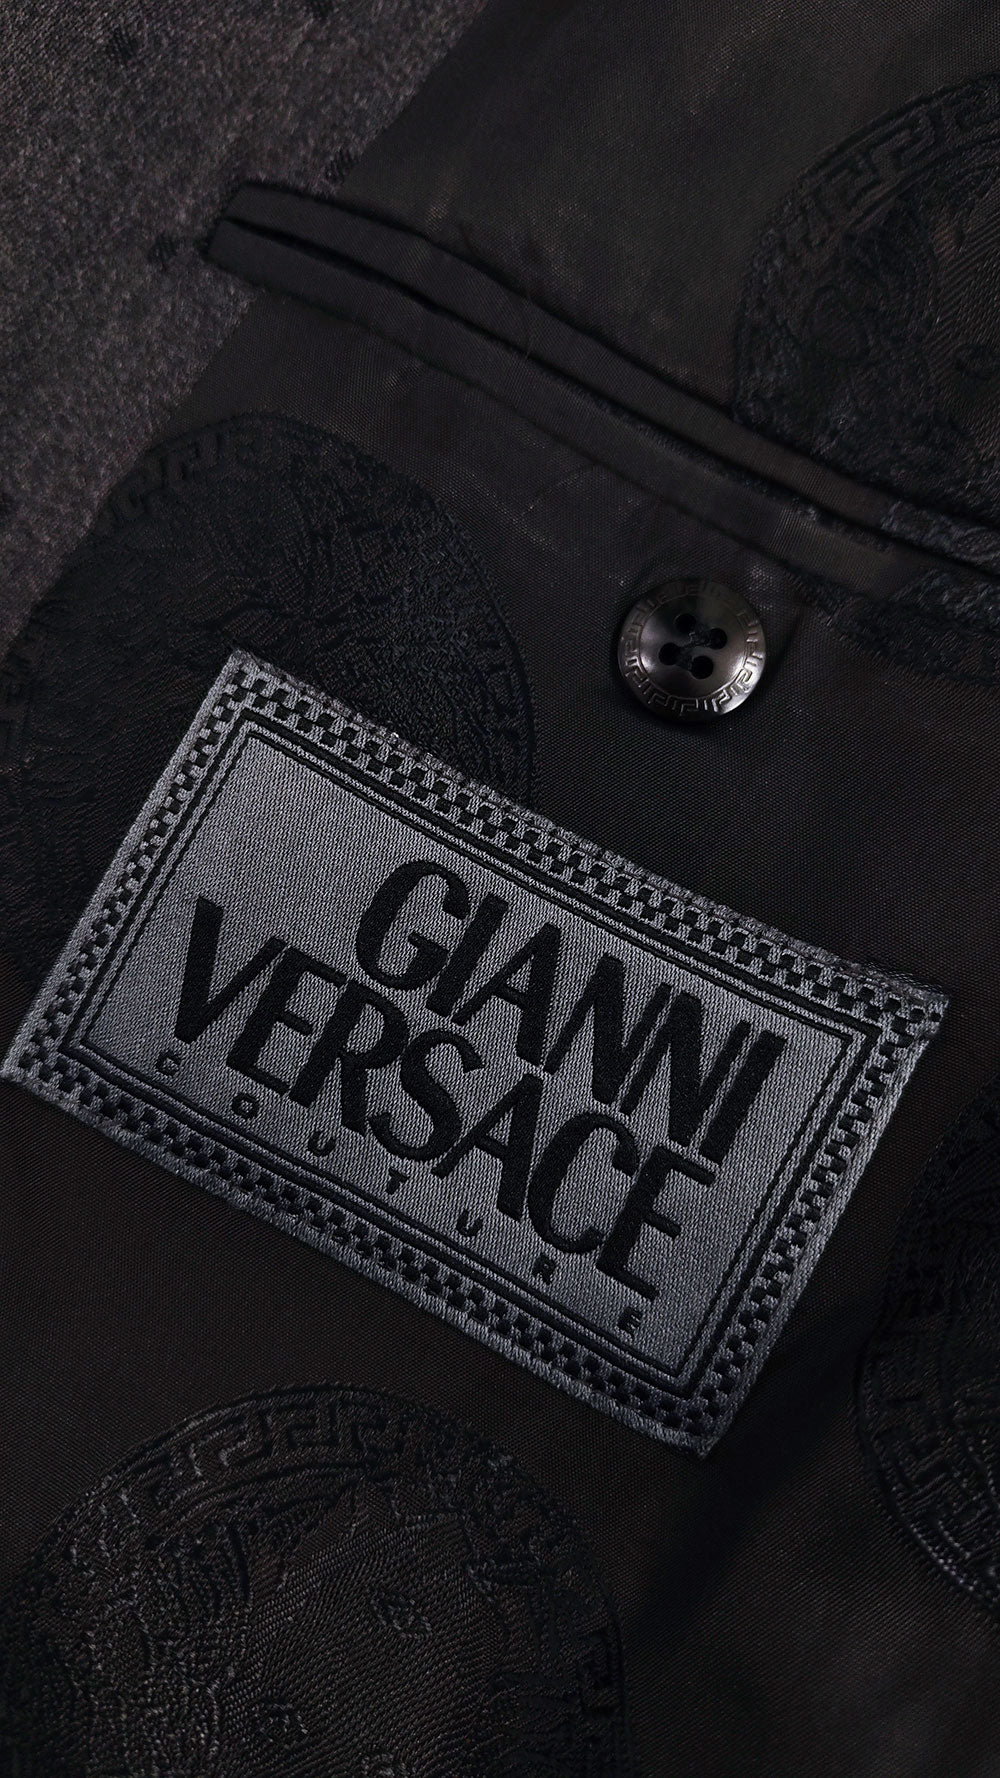 Gianni Versace Vintage Mens Charcoal Grey Wool Polka Dot Suit